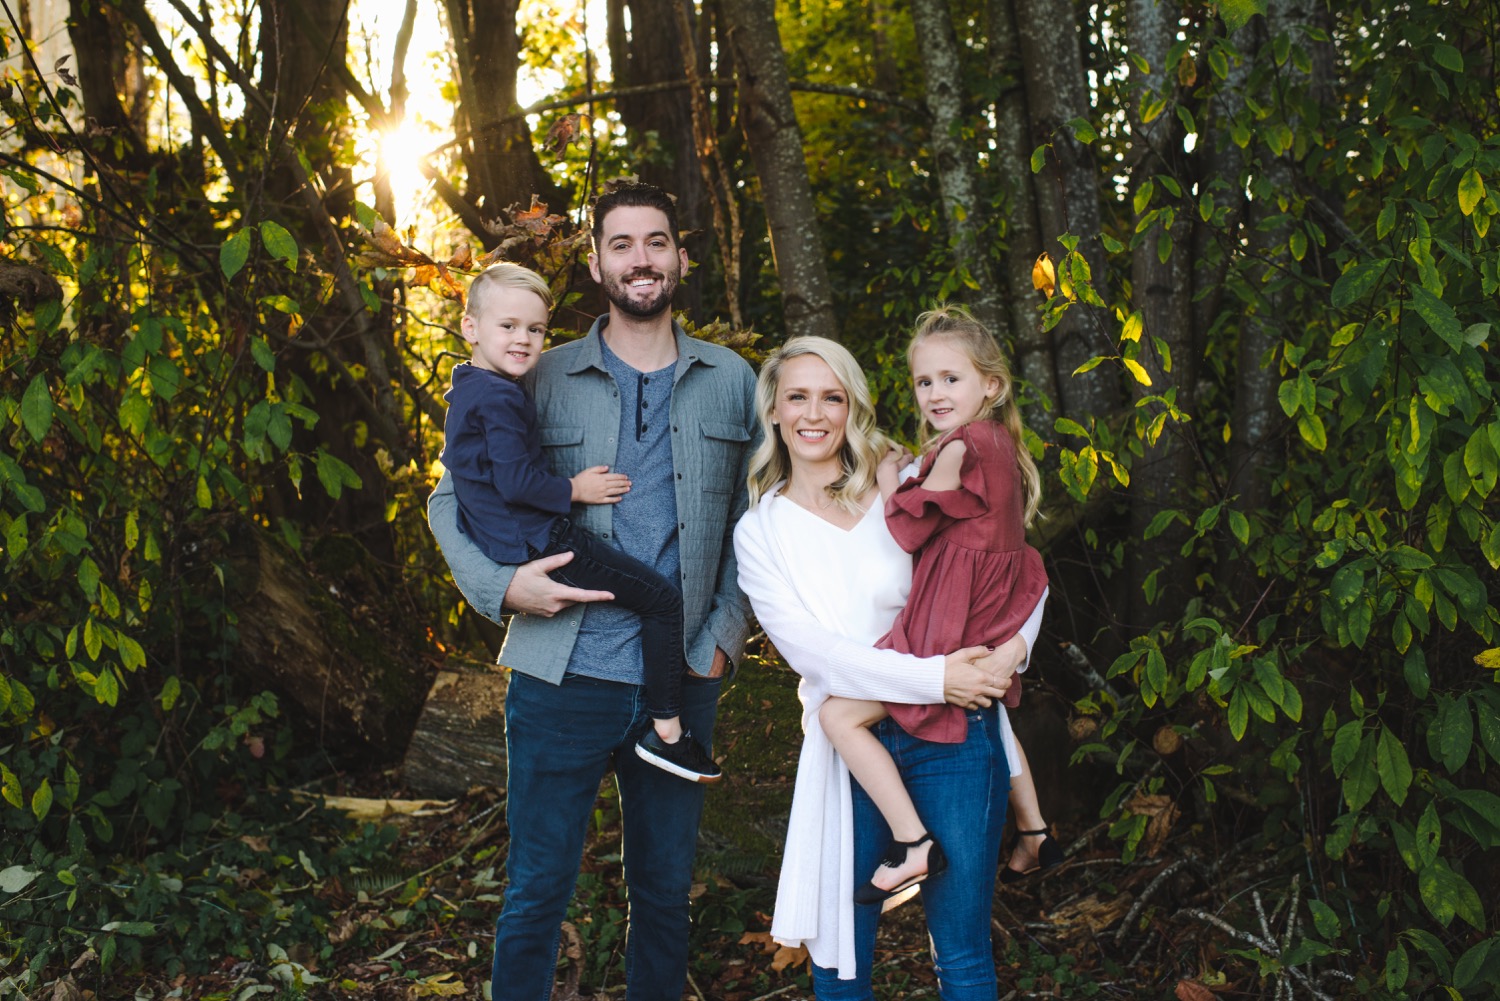 Family of 4 Pose Ideas | Big family photos, Family portrait poses, Fall  photoshoot family